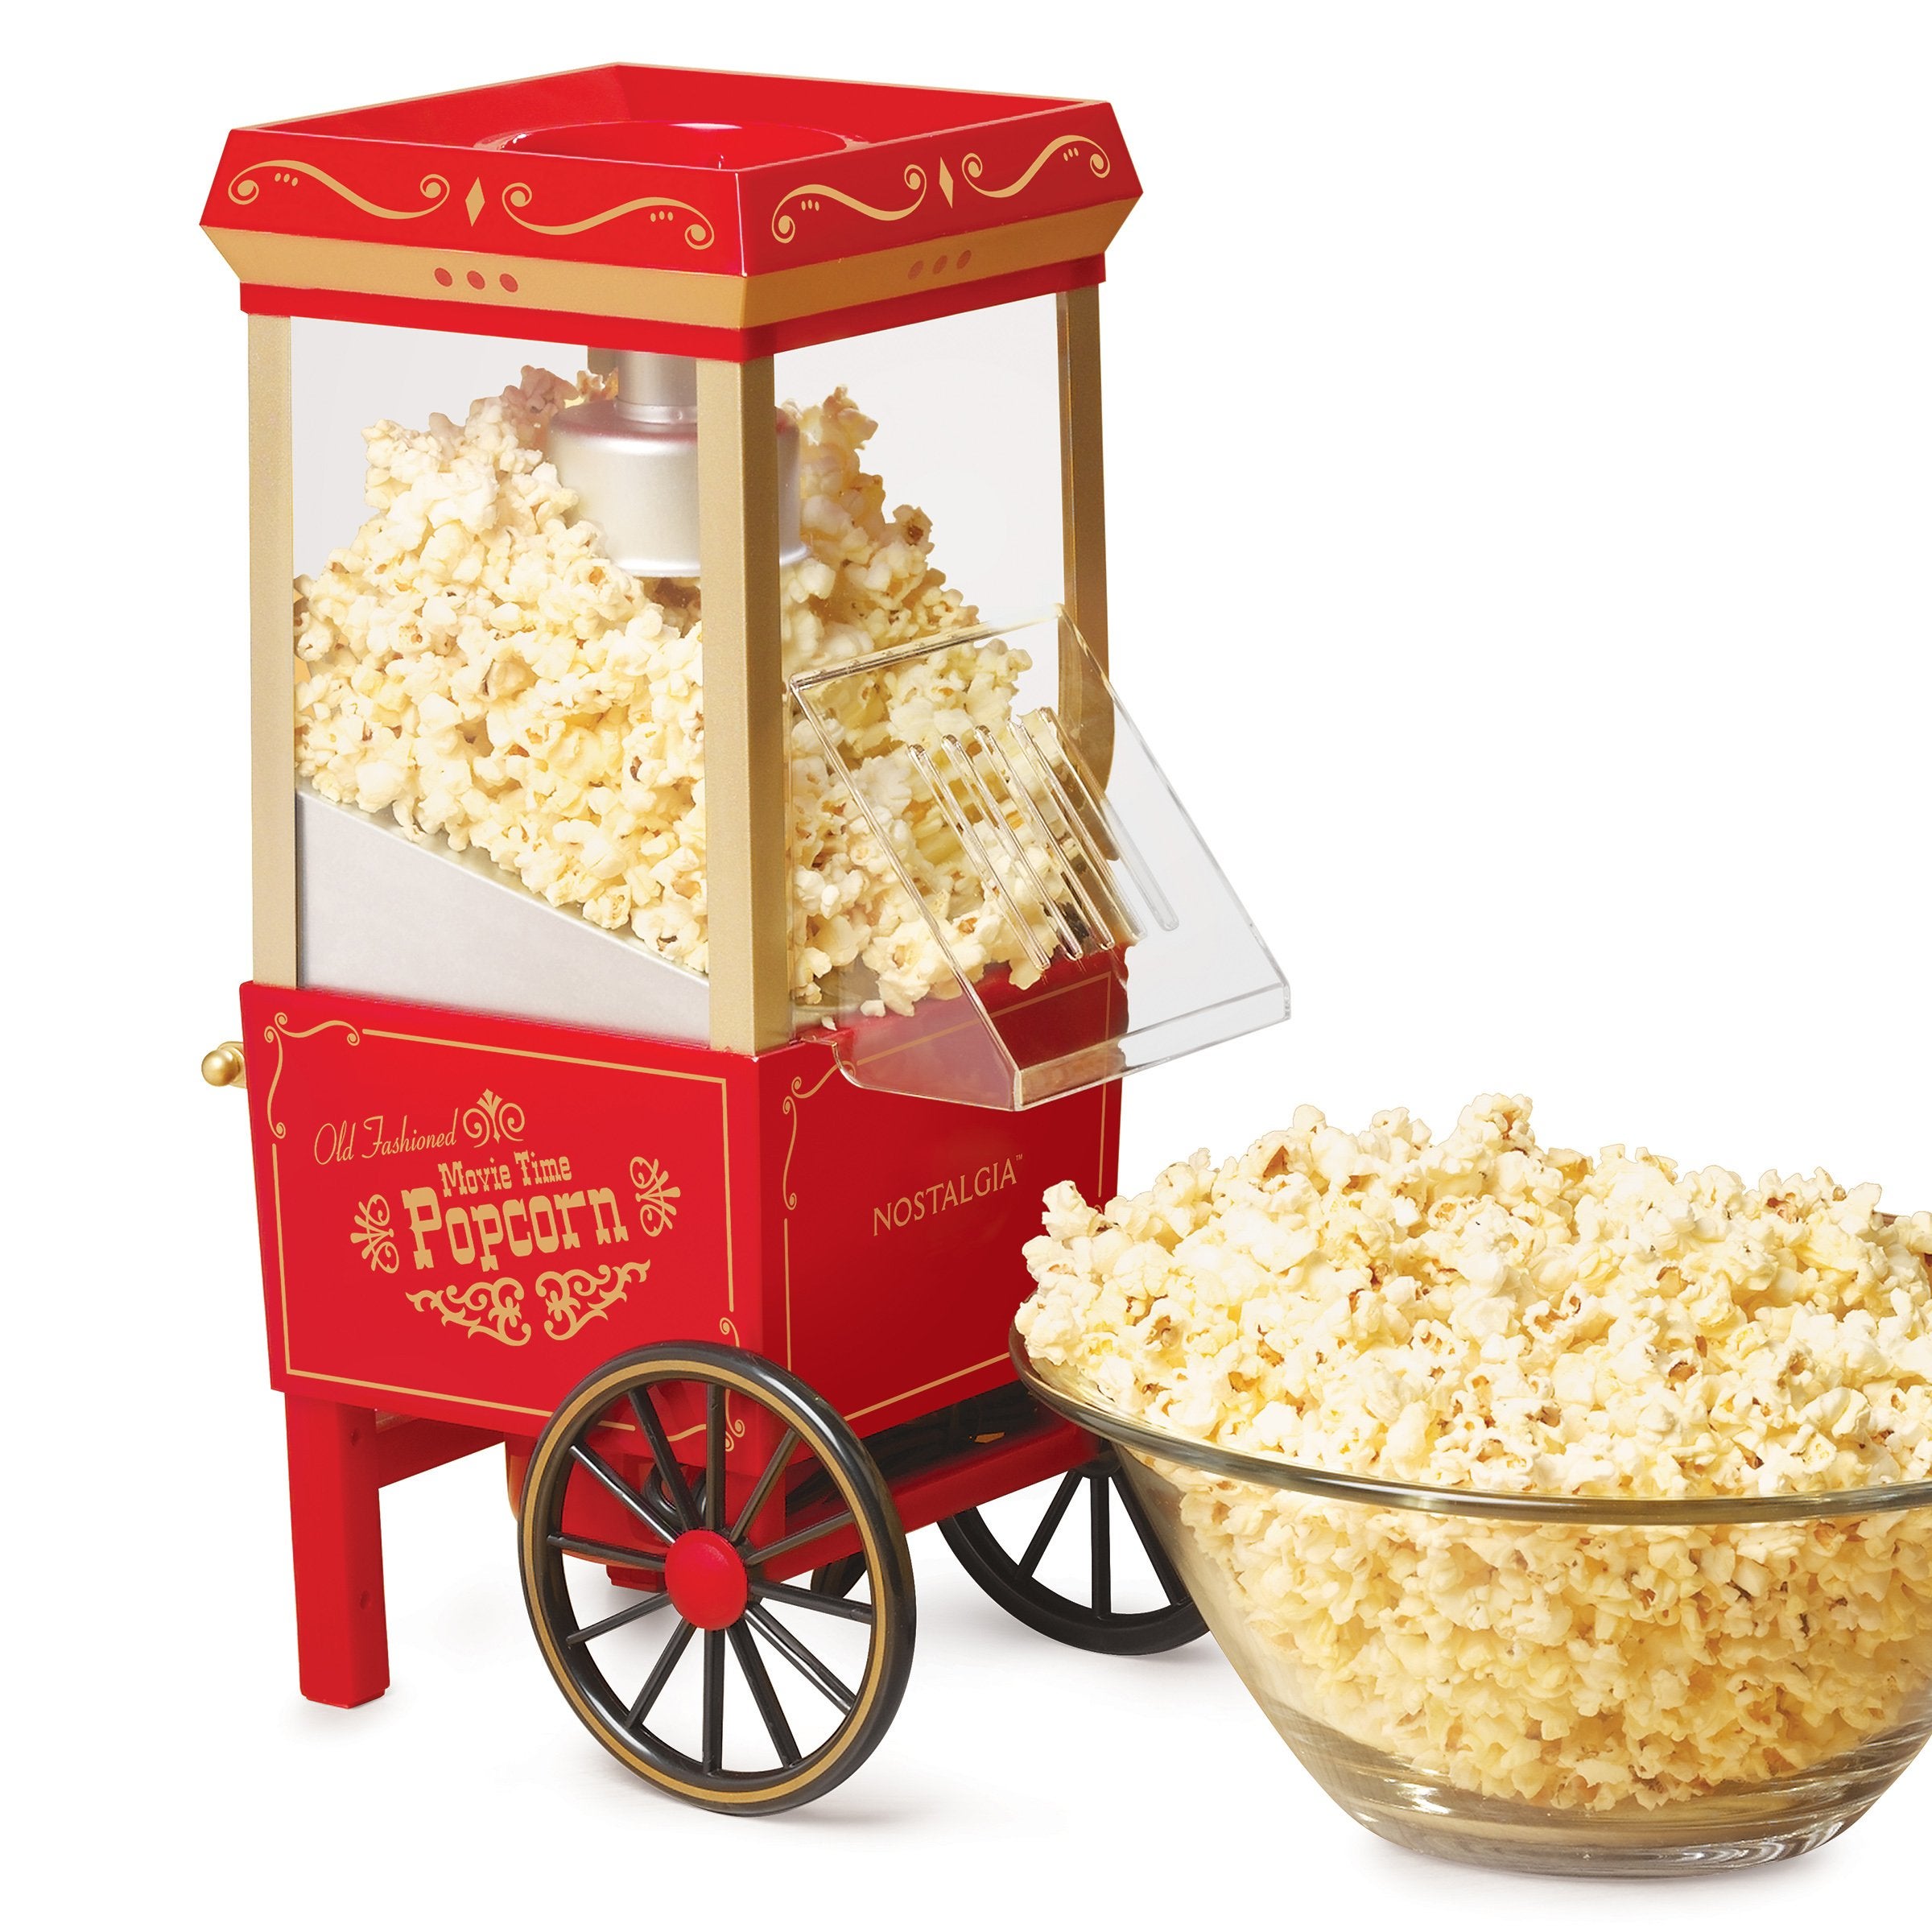 Аппарат для попкорна купить. Попкорница-мейкер. Popcorn аппарат. Машина для производства попкорна (tr 7500). Аппарат для приготовления попкорна (попкорн мейкер) URM.